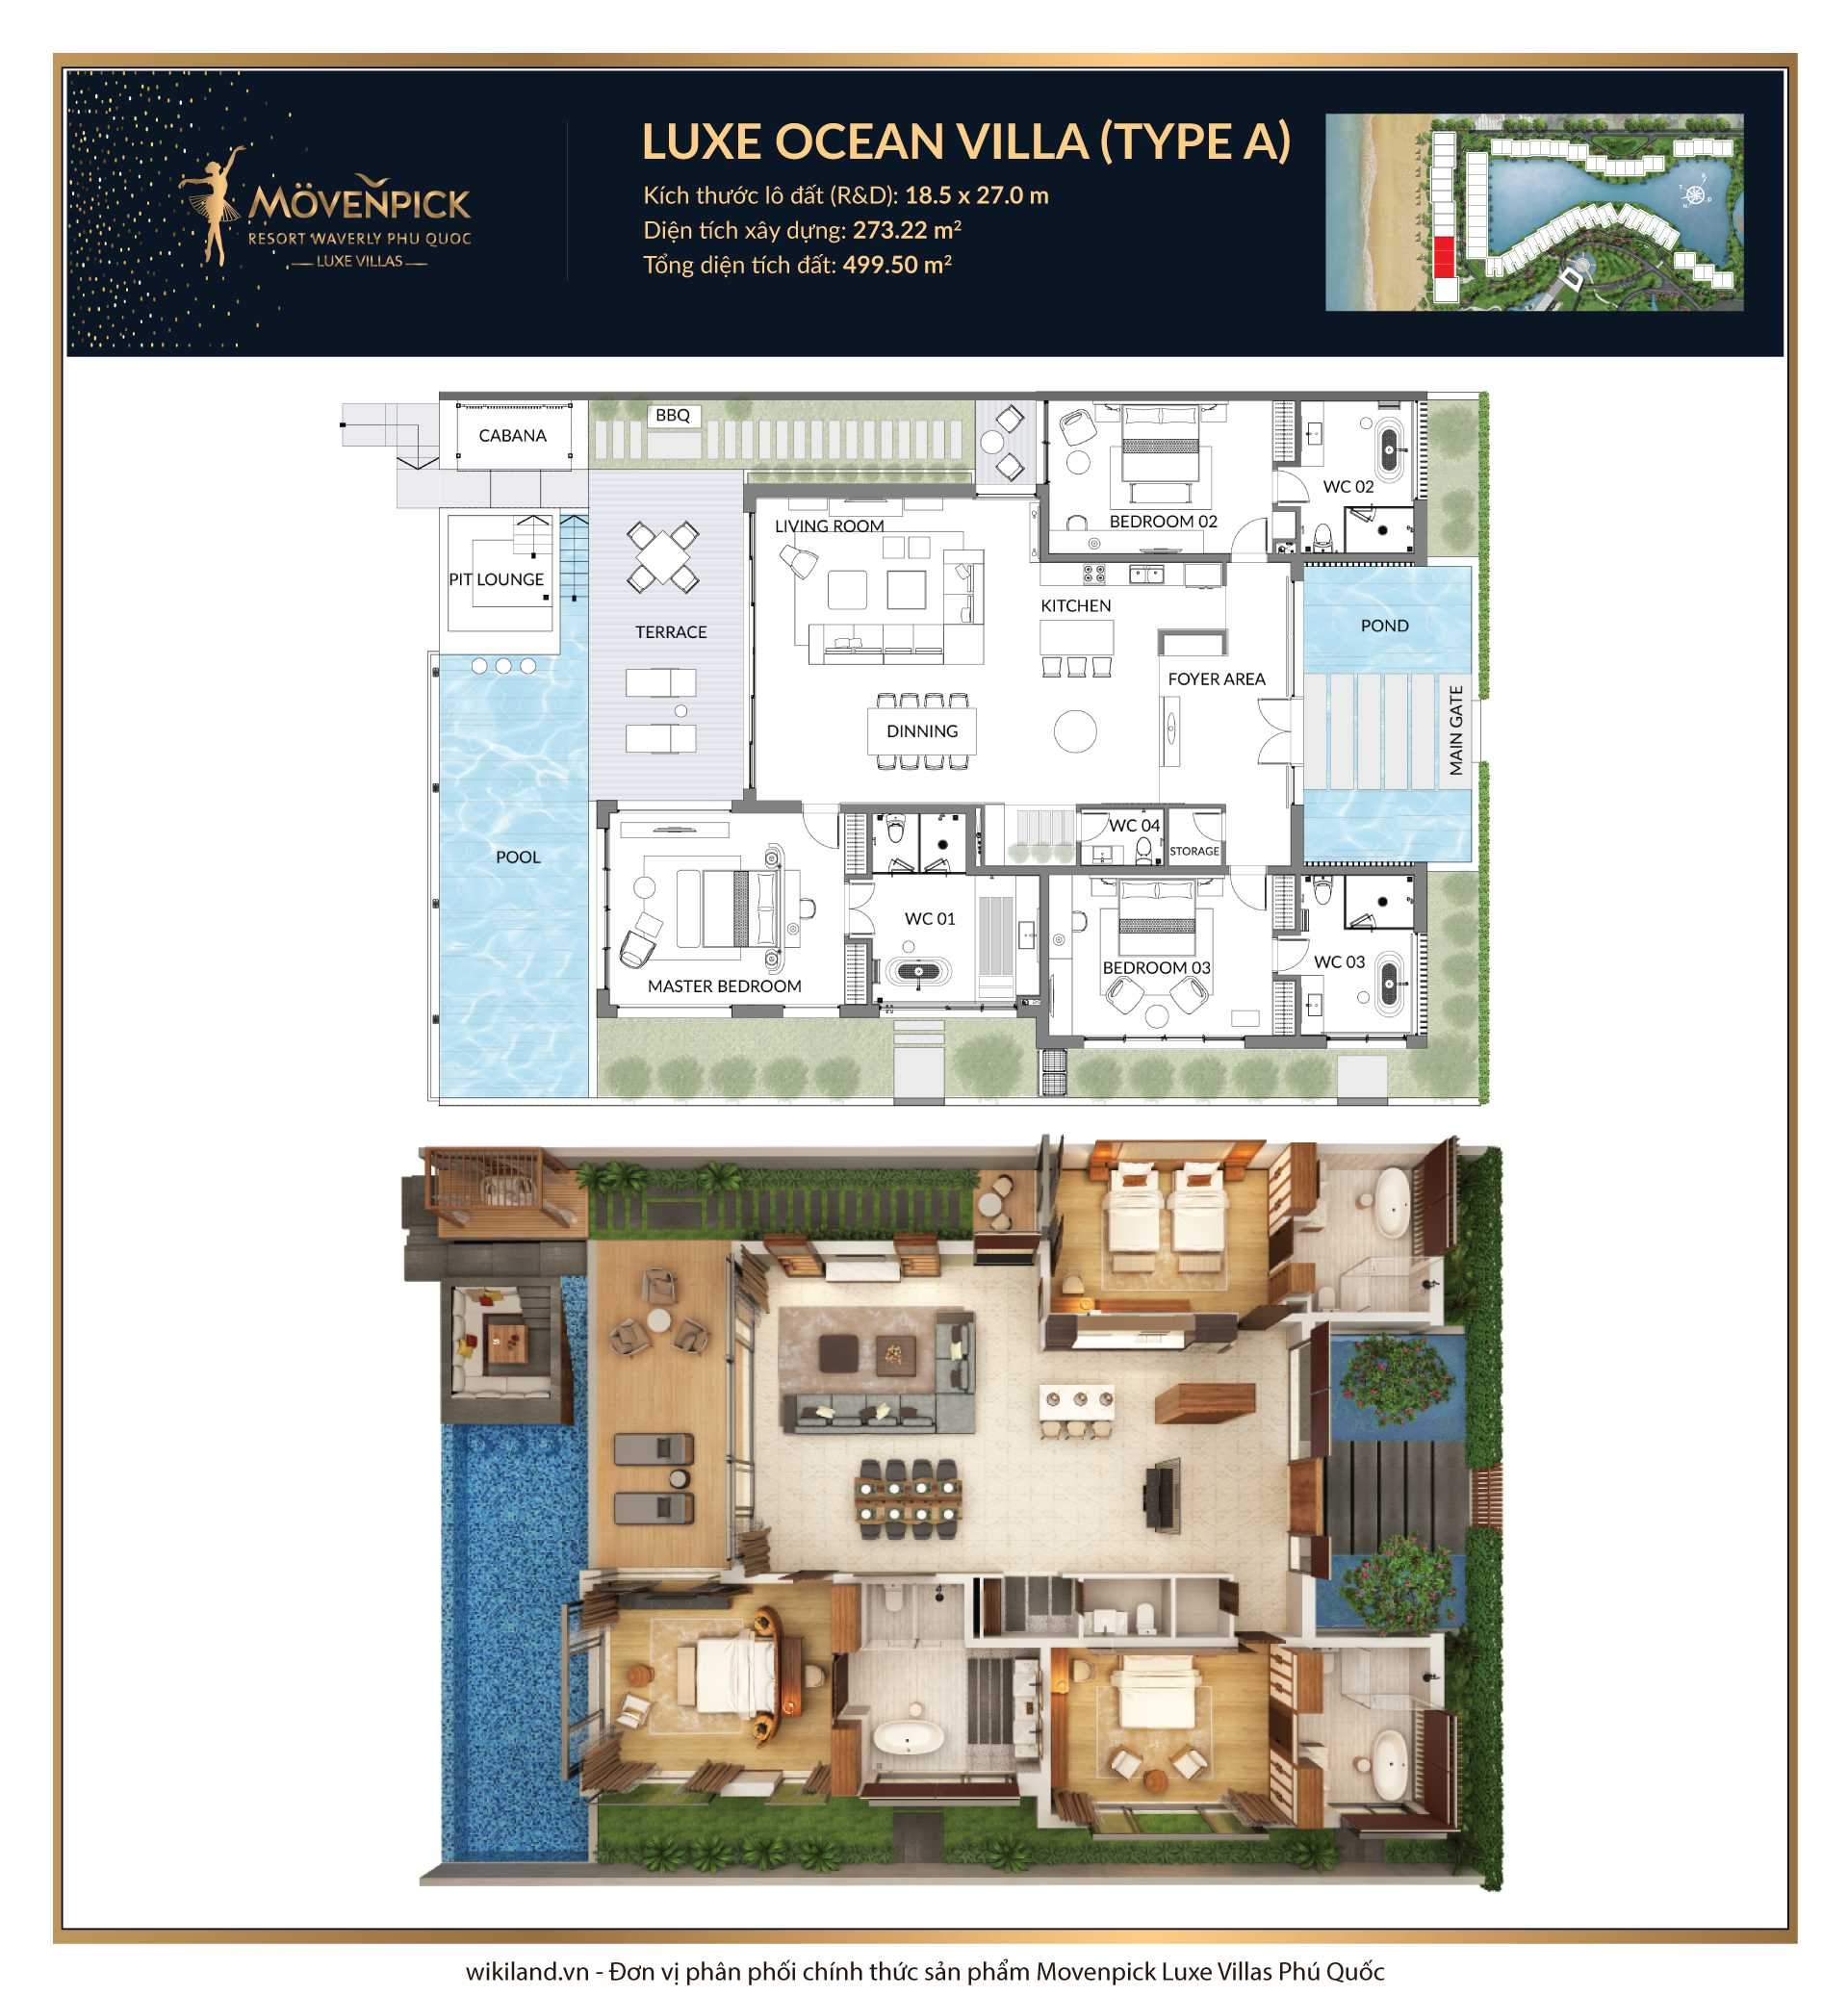 Biet thu movenpick luxe ocean villa type a wikiland vn